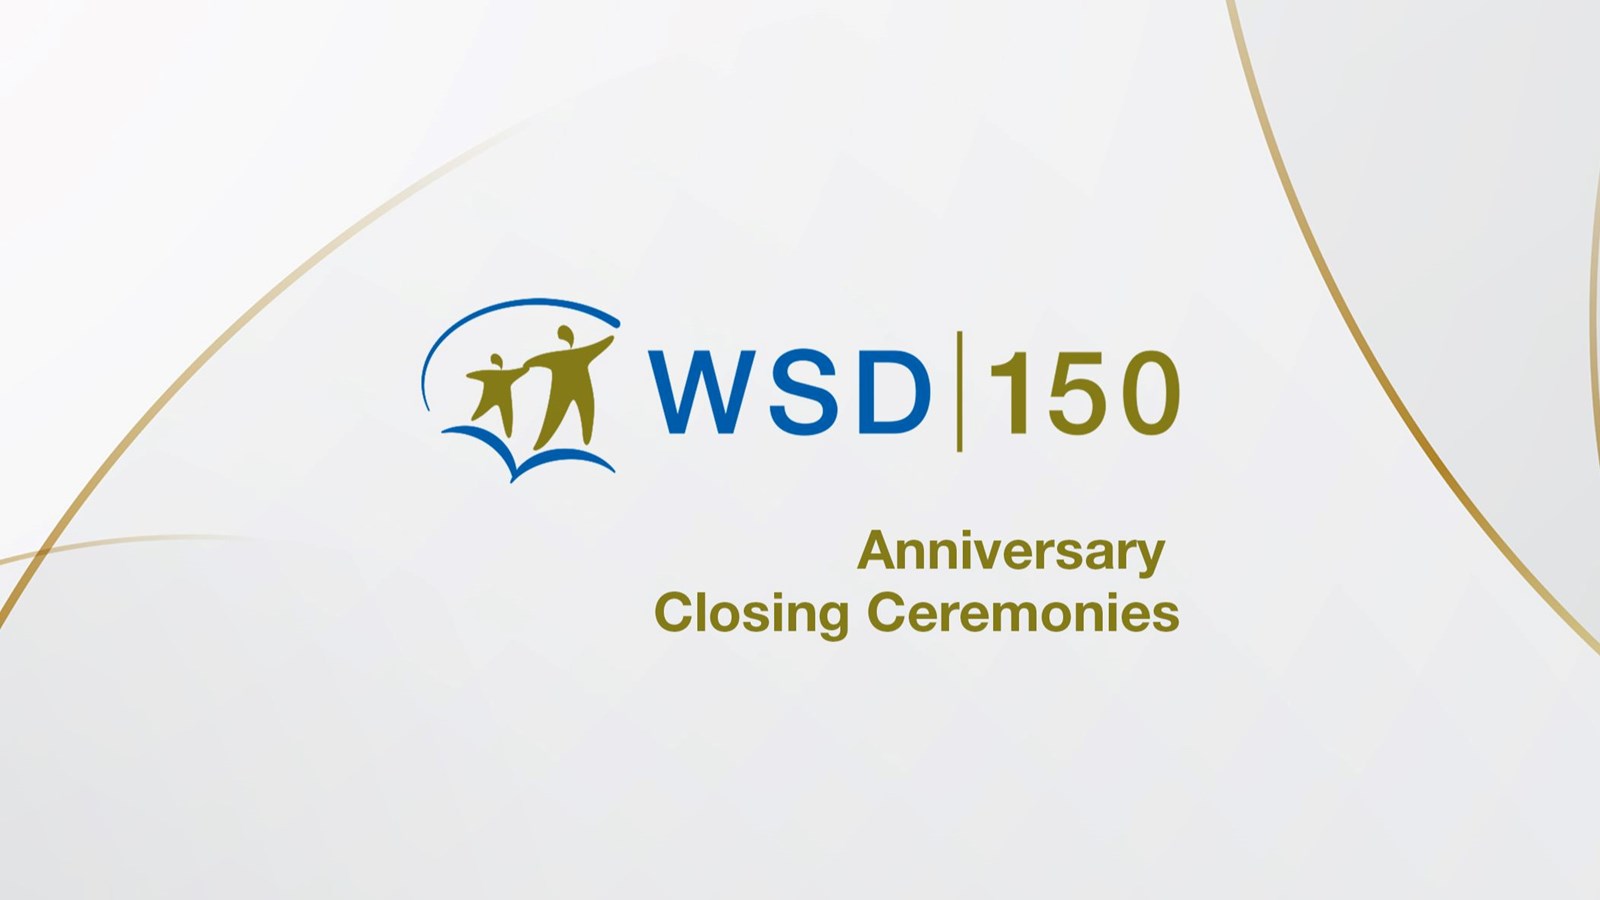 WSD 150 Anniversary Closing Ceremonies